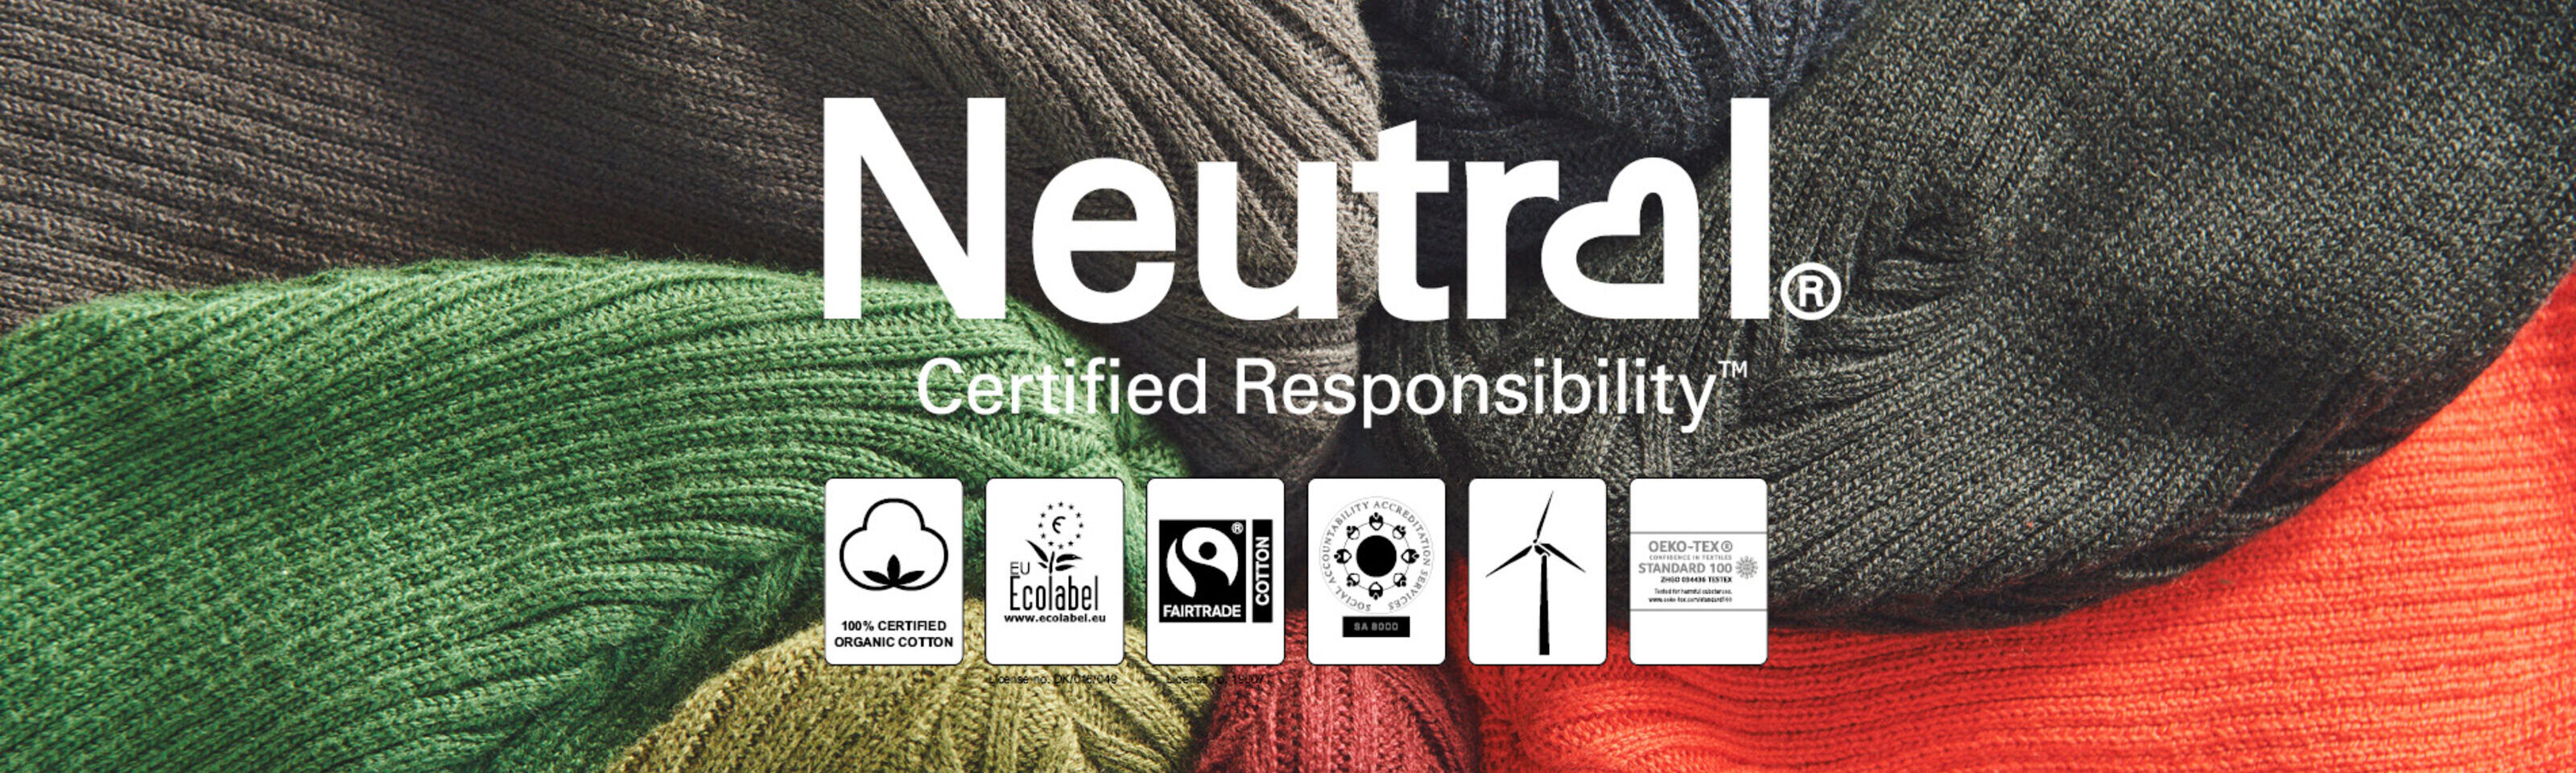 Neutral ®: Your Eco-Friendly Fashion Choice